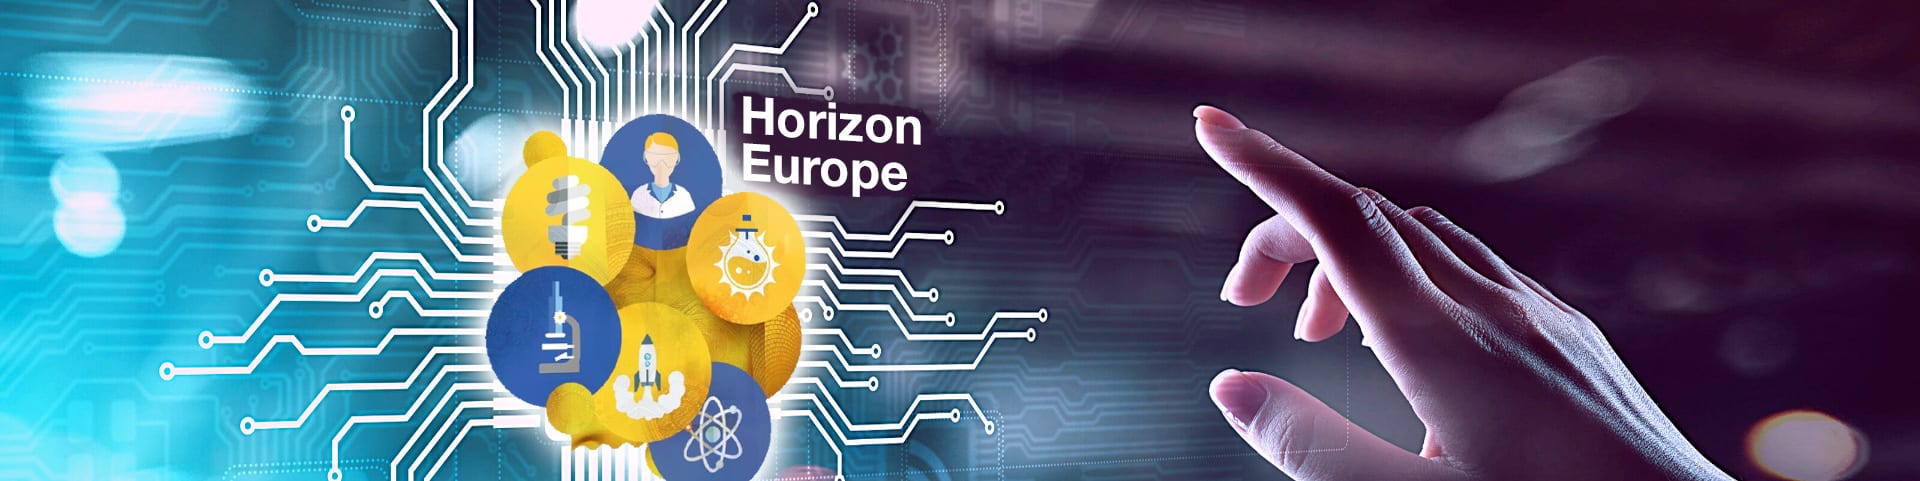 Horizon Europe (HEU)no alt text set su stradedeuropa.eu